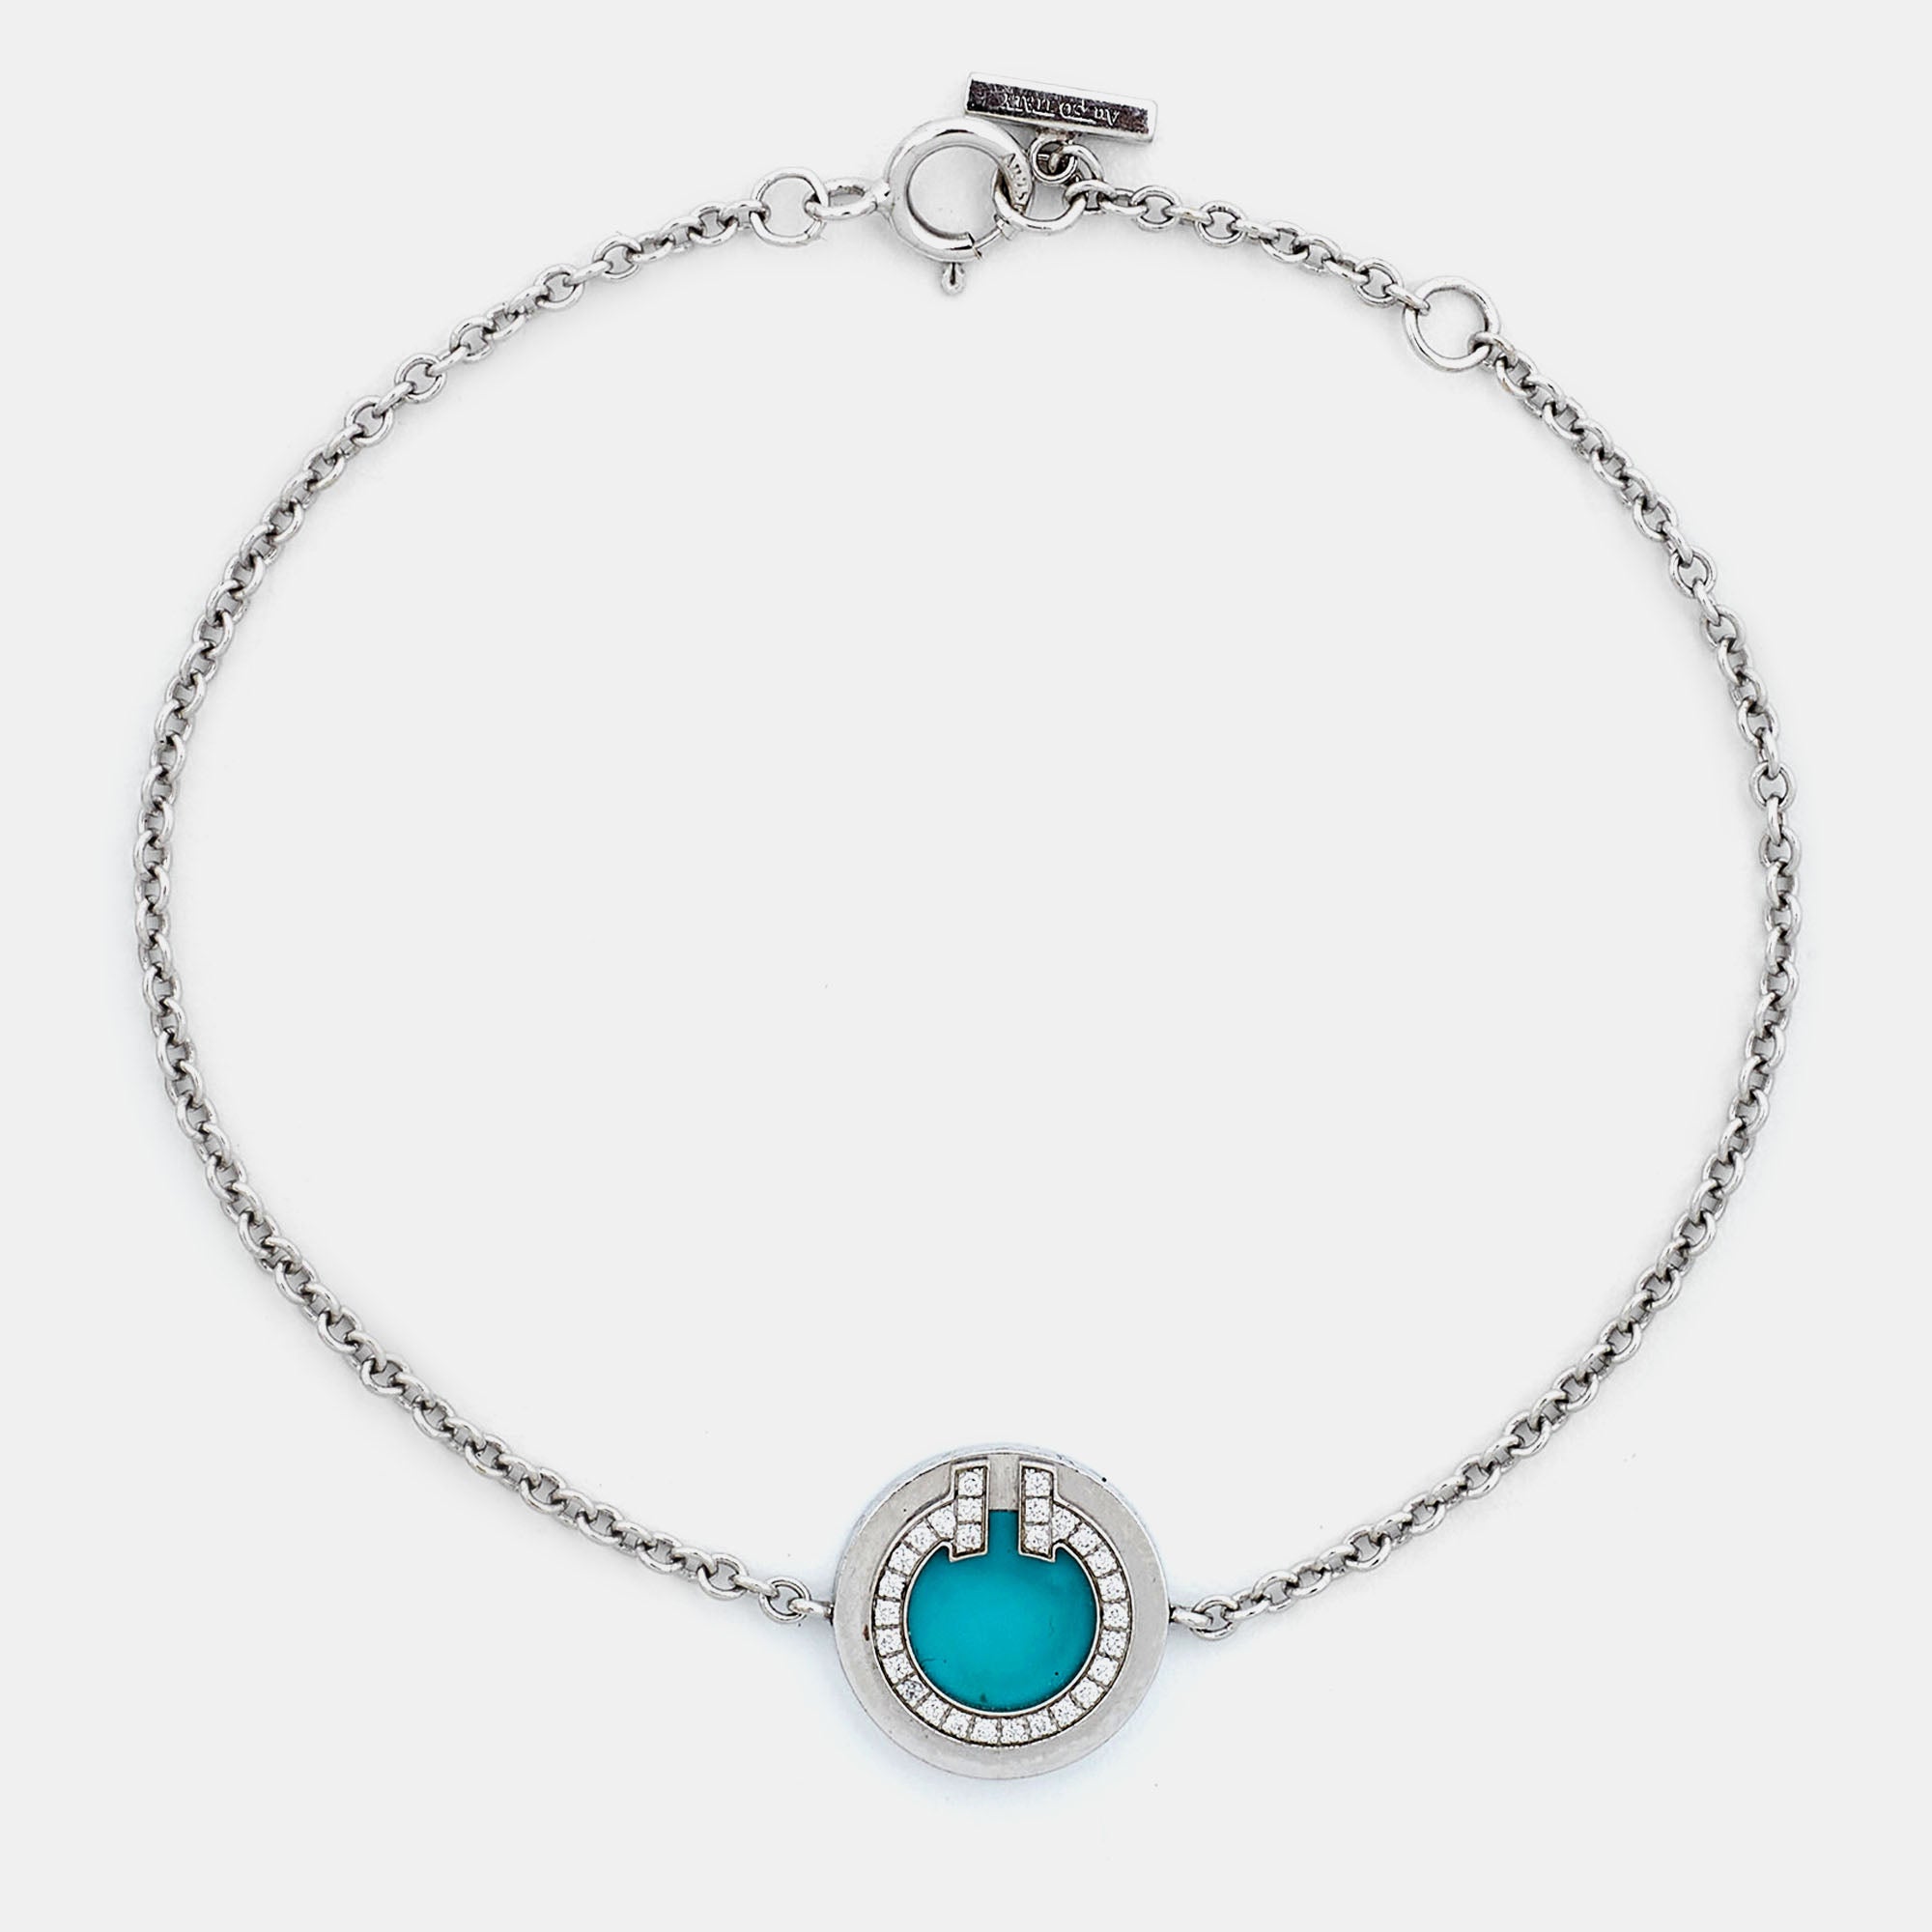 Tiffany & Co. T Square Bracelet Size Medium Sterling Silver | eBay